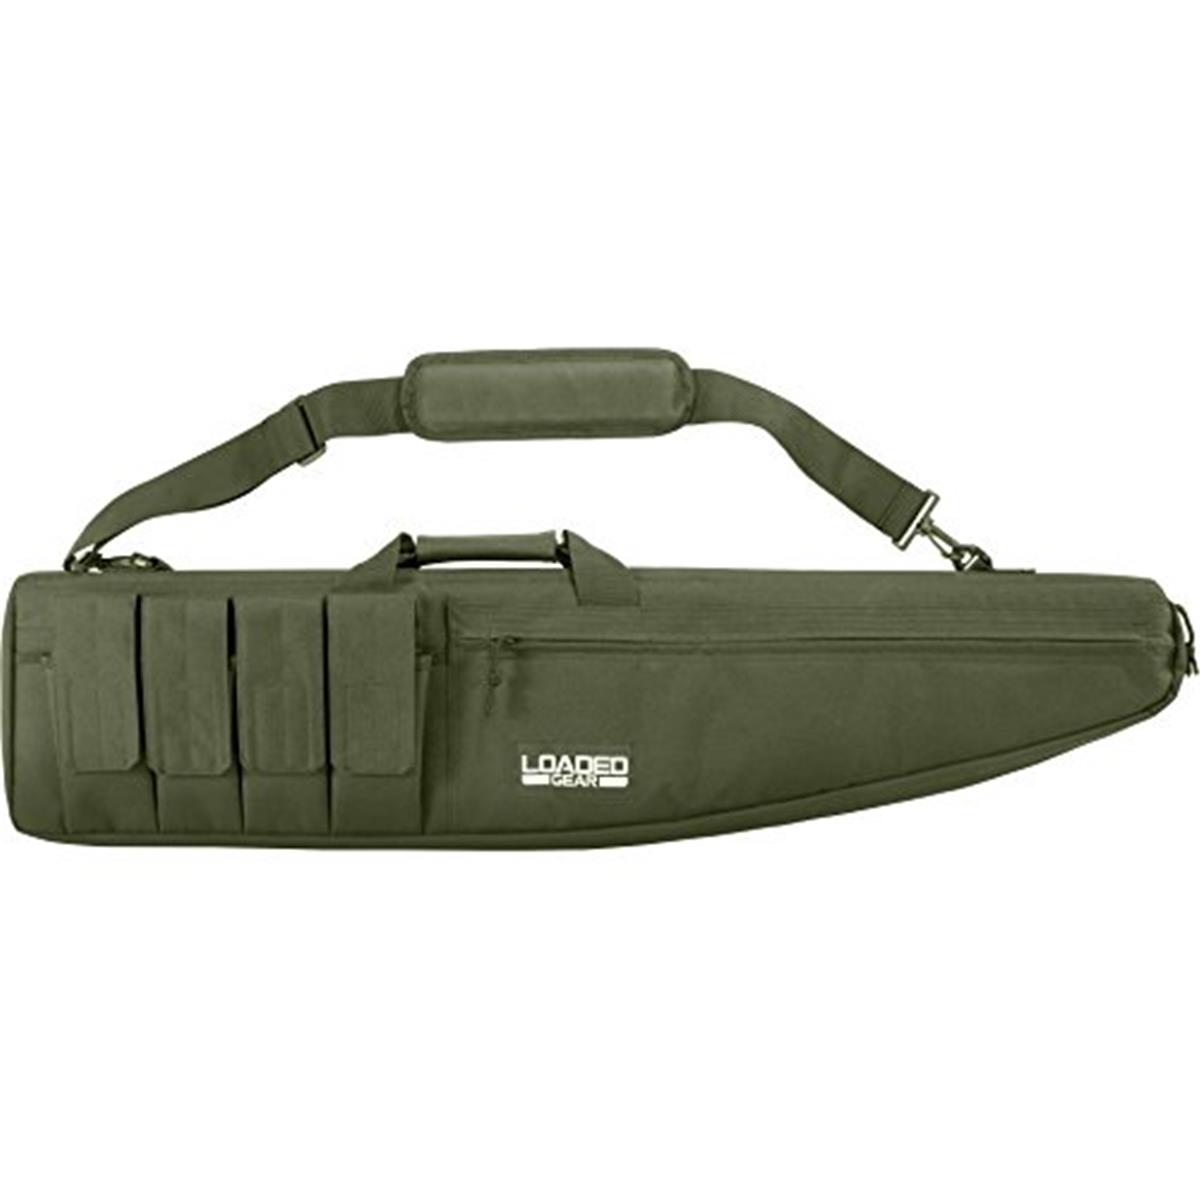 Bi12320 Loaded Gear Rx-100 48 In. Tactical Rifle Bag Od Green